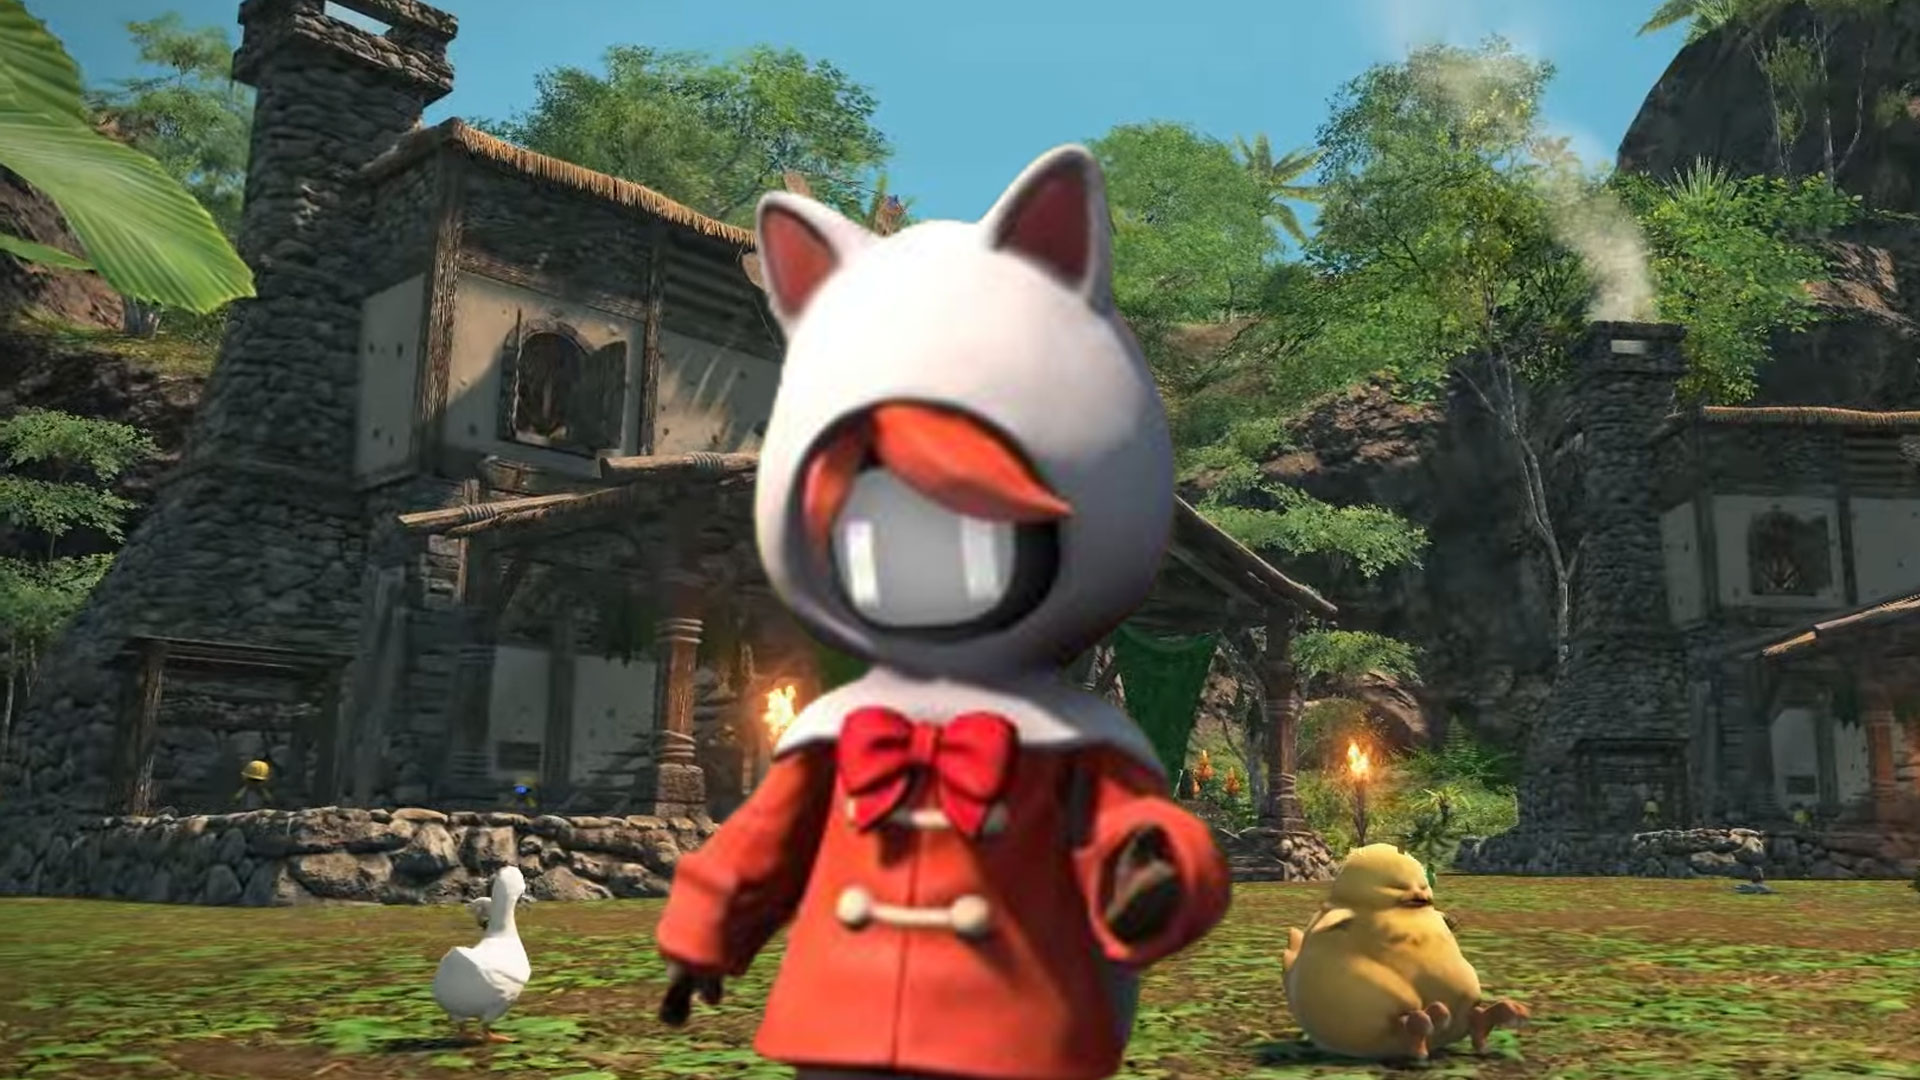 FFXIV Island Sanctuary is basically Animal Crossing on PC